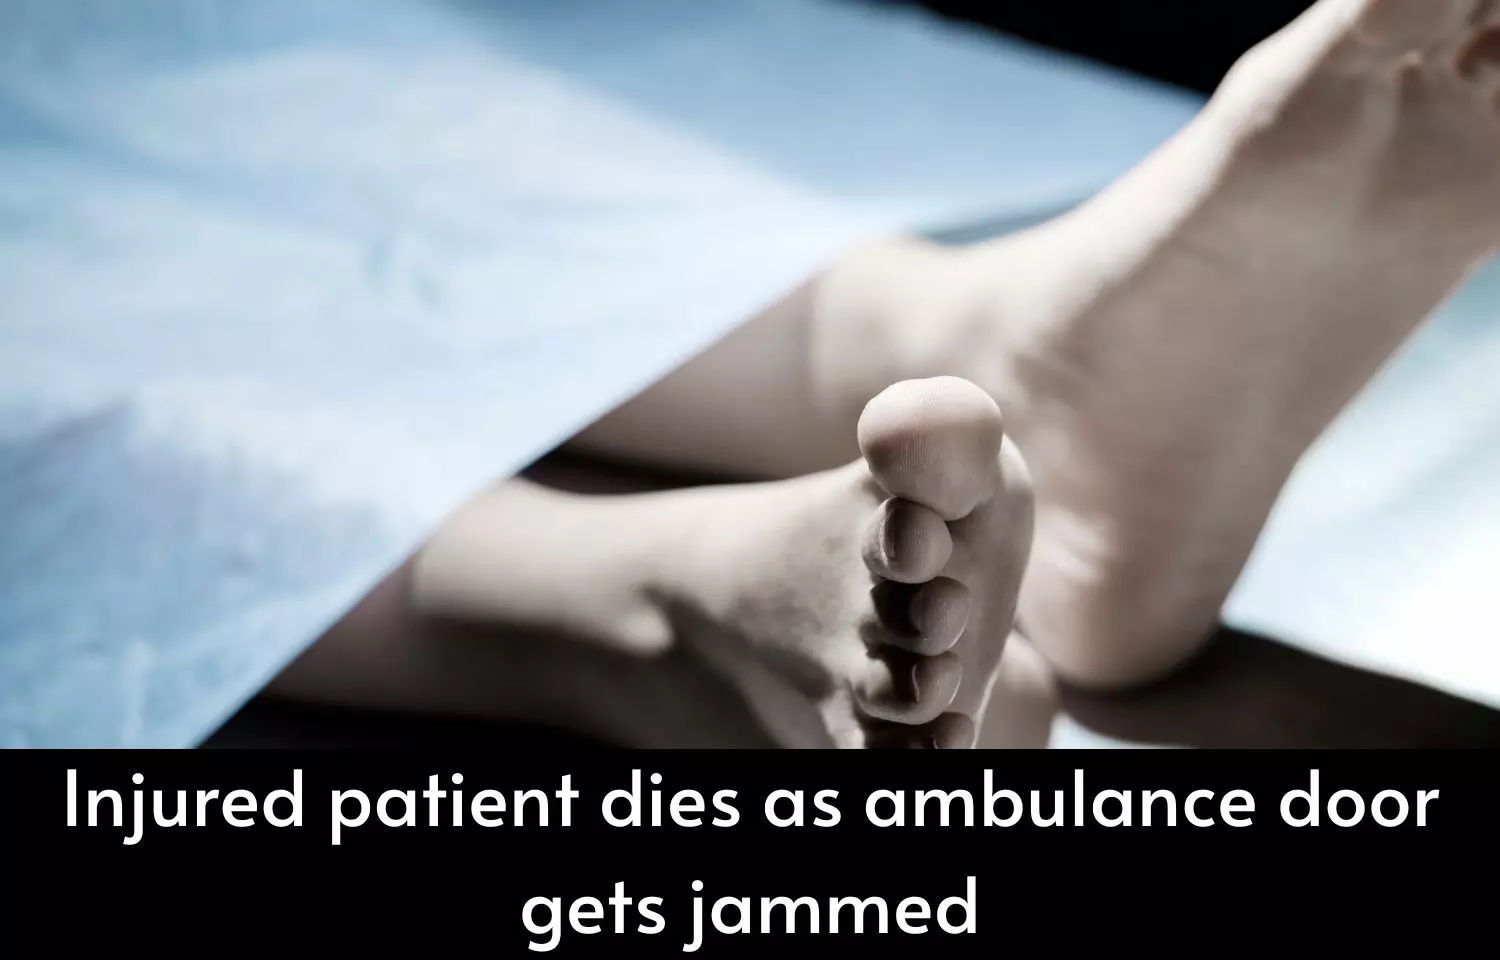 Kerala: 66-year-old patient dies as ambulance door gets jammed